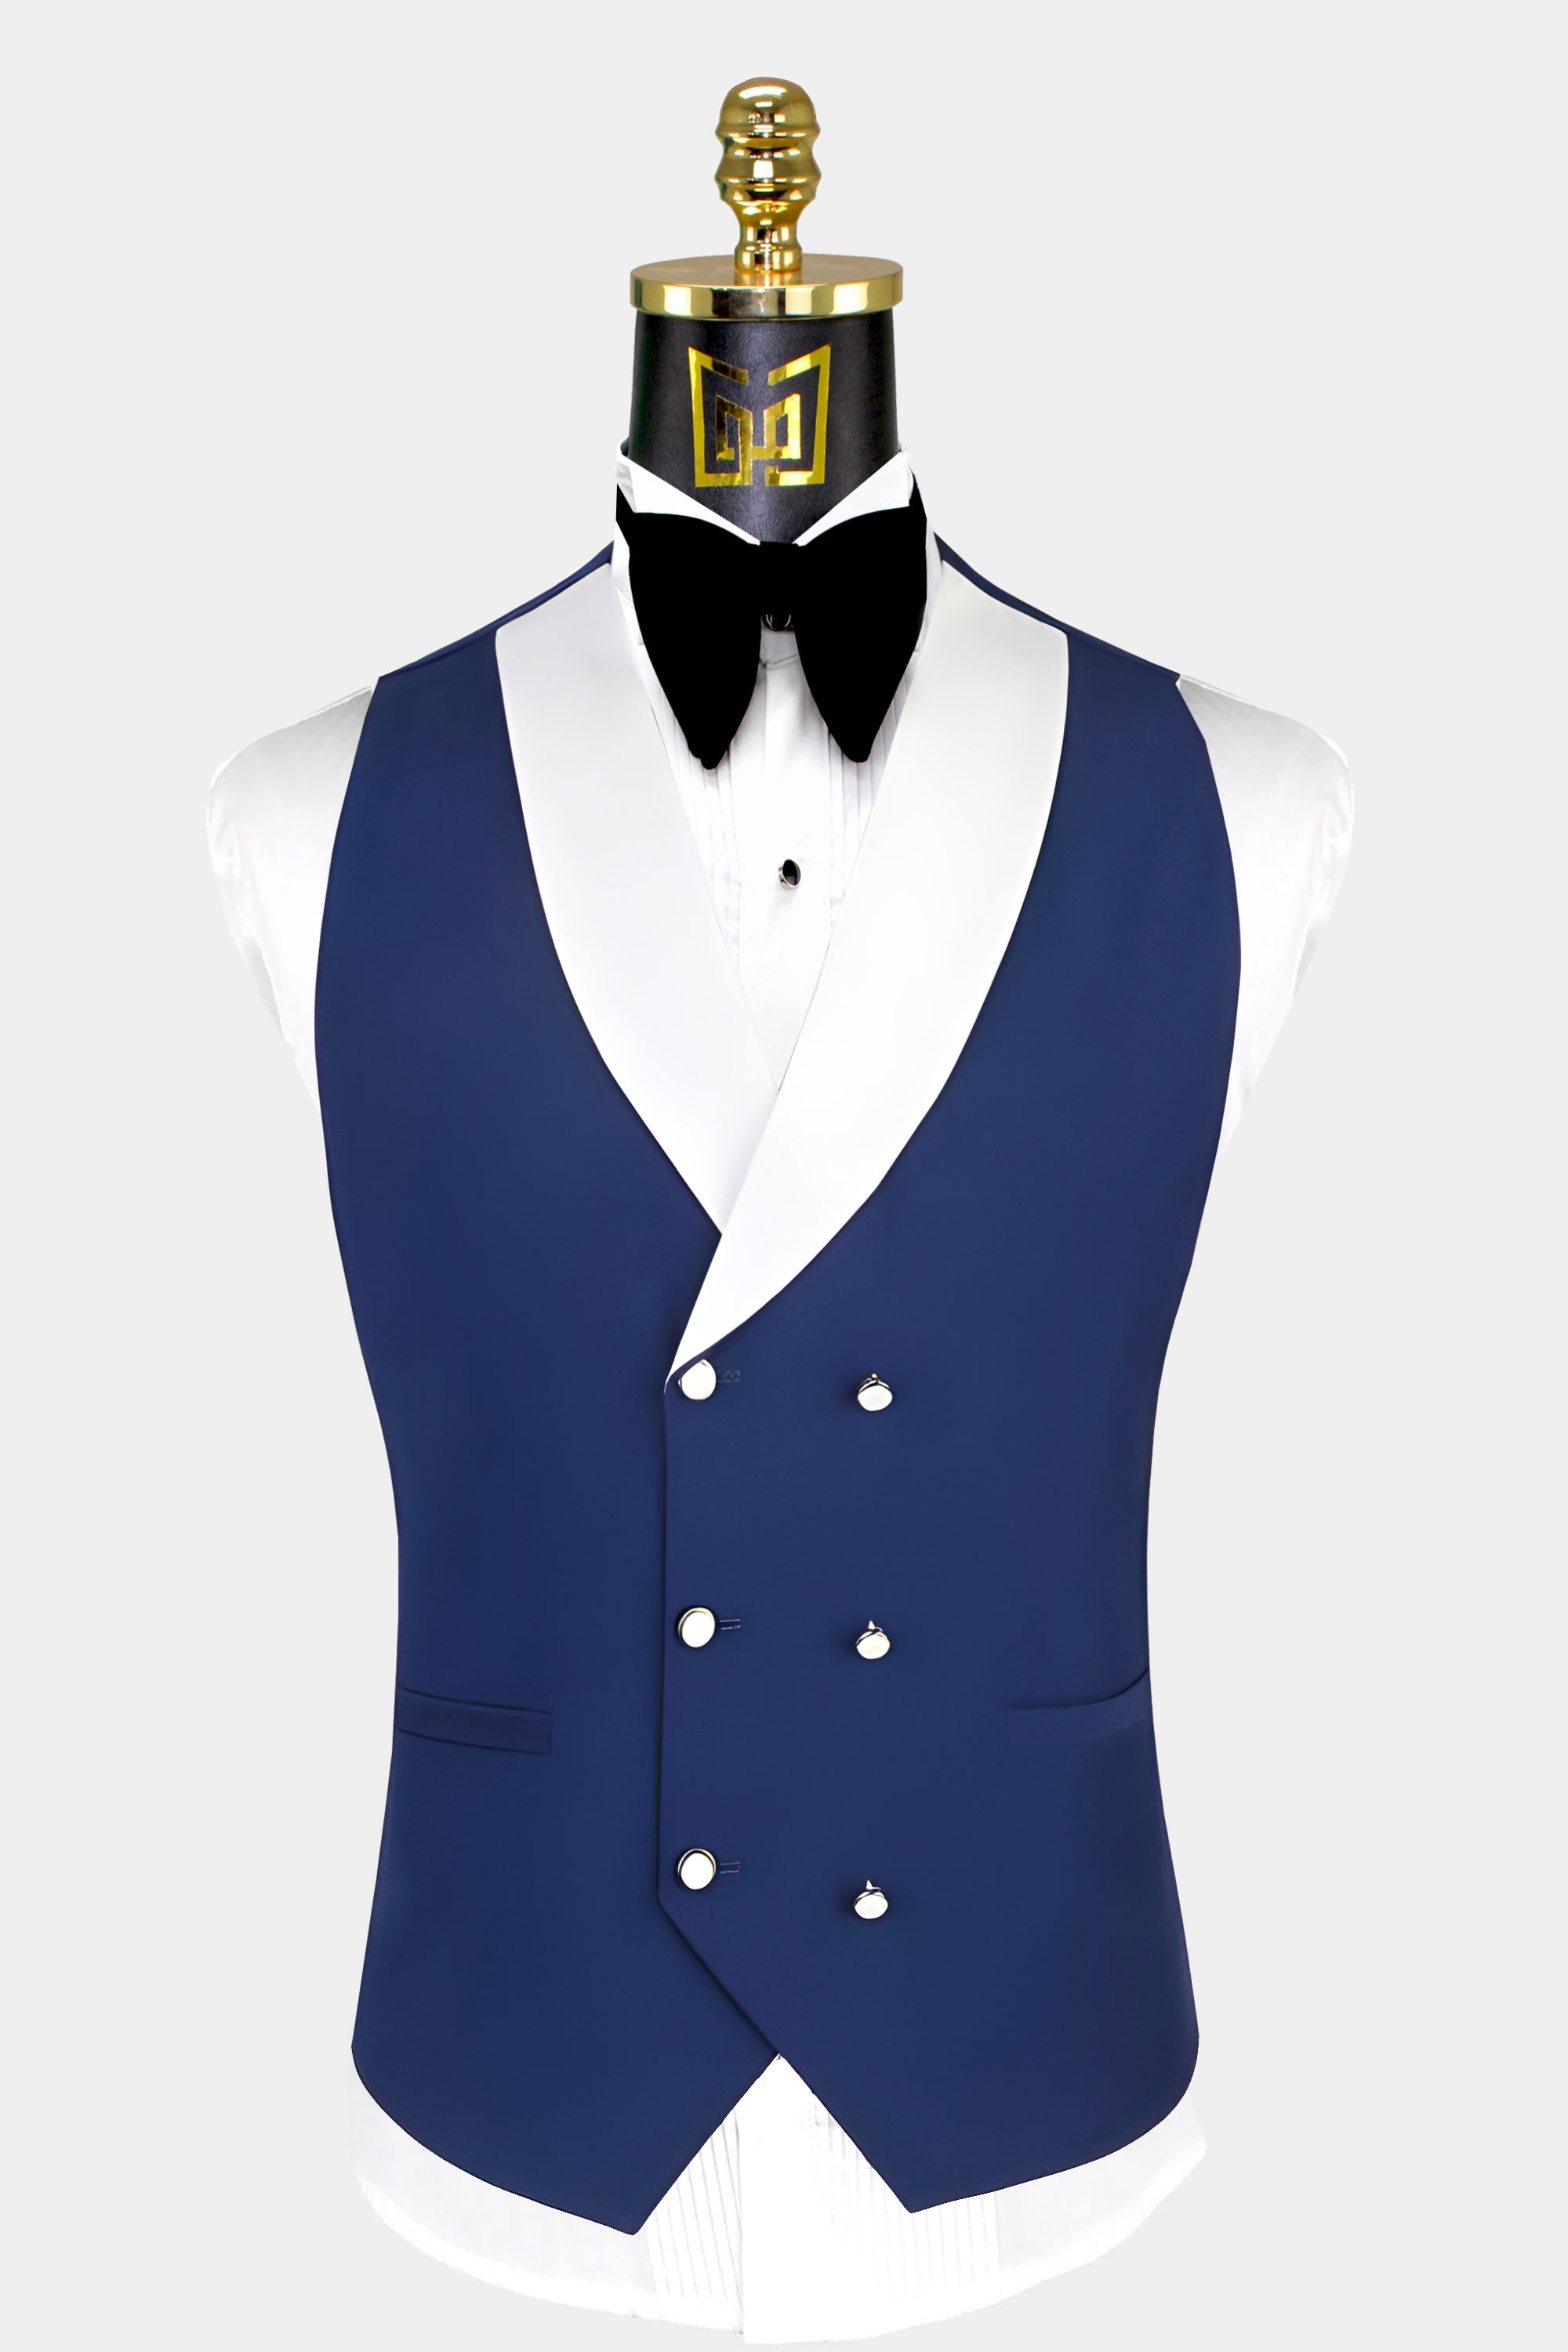 Mens-Navy-Blue-and-White-Tuxedo-Vest-from-Gentlemansguru.com